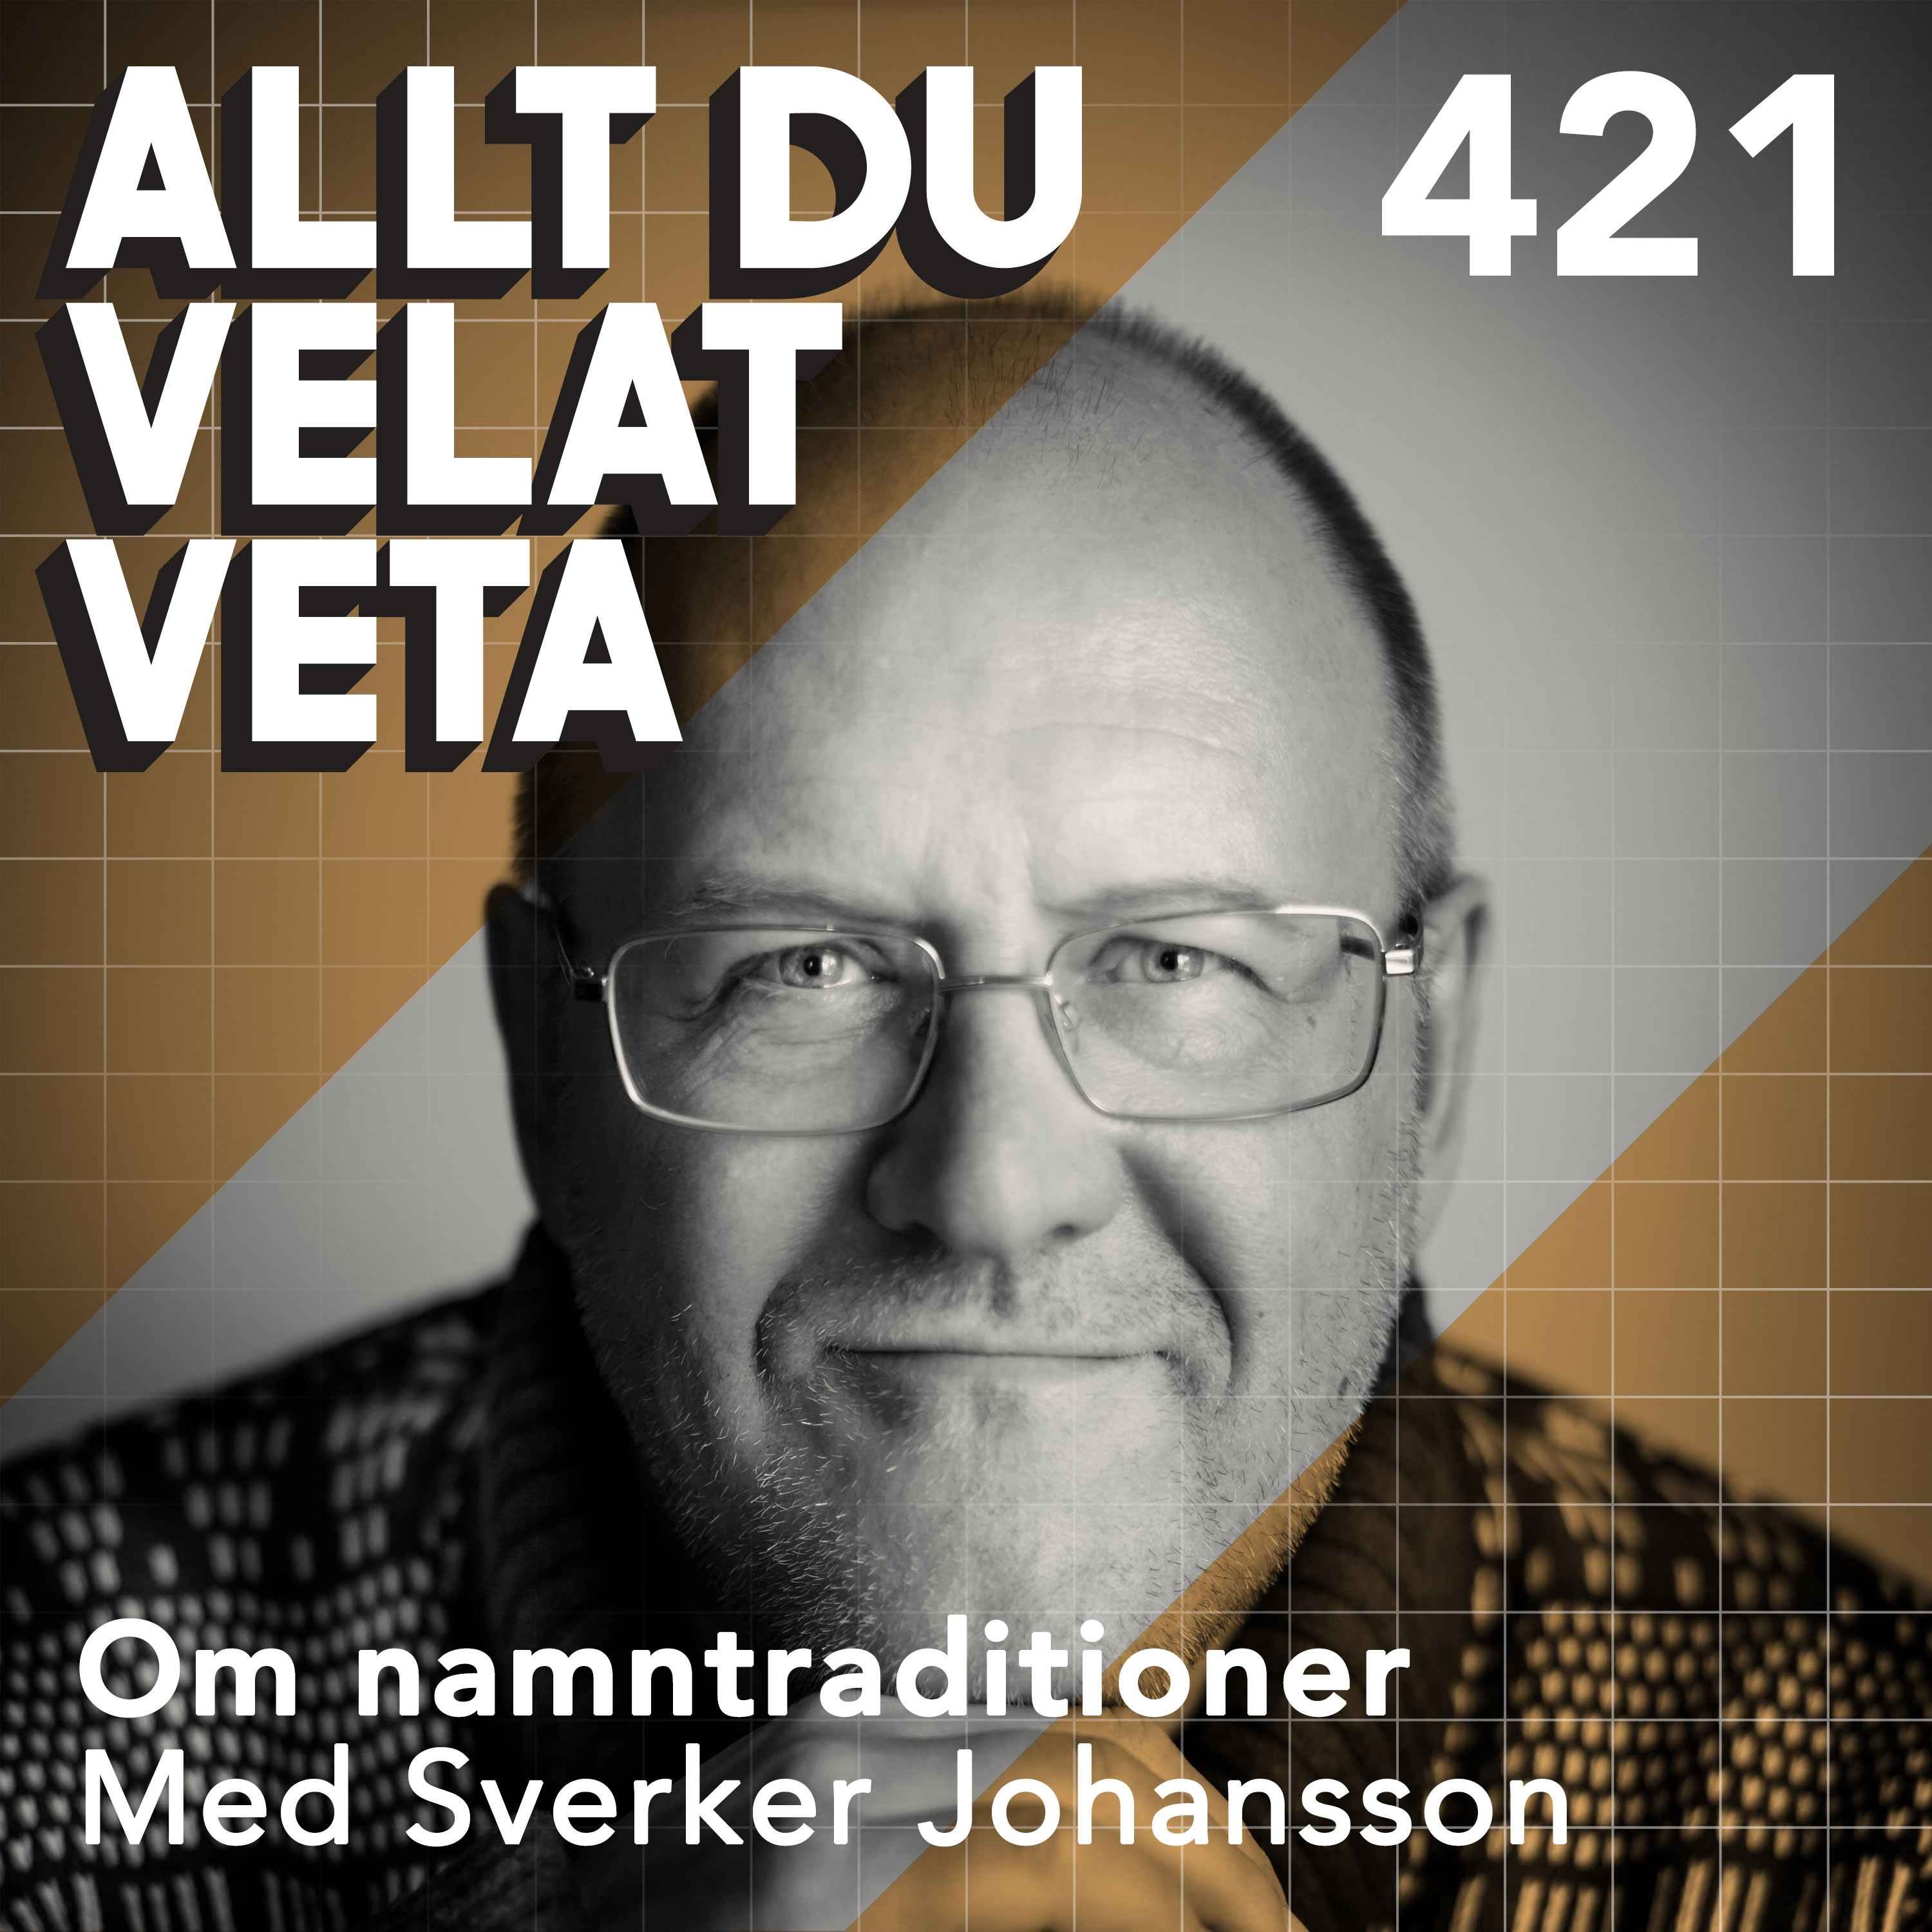 421 Om namntraditioner med Sverker Johansson